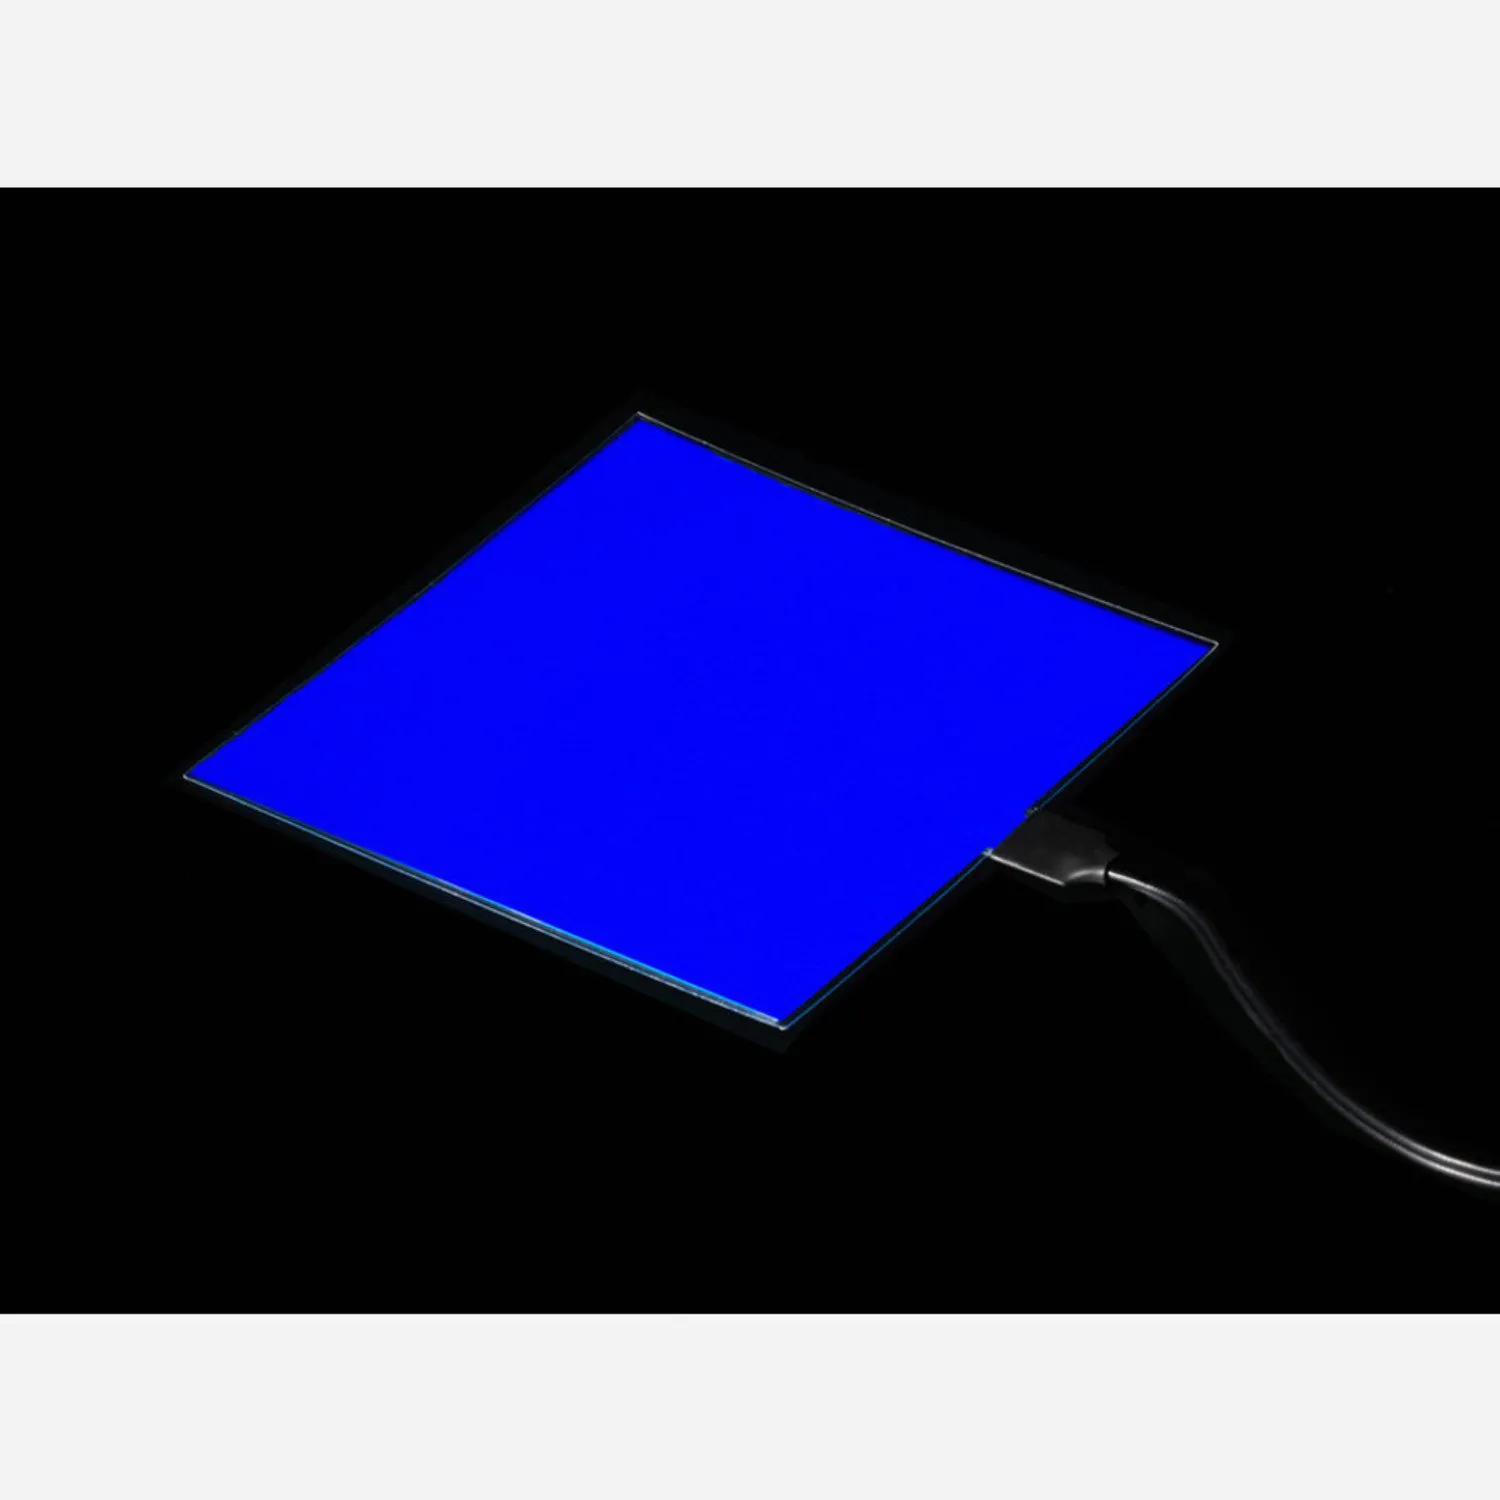 Photo of Electroluminescent (EL) Panel Starter Pack - 10cm x 10cm Blue